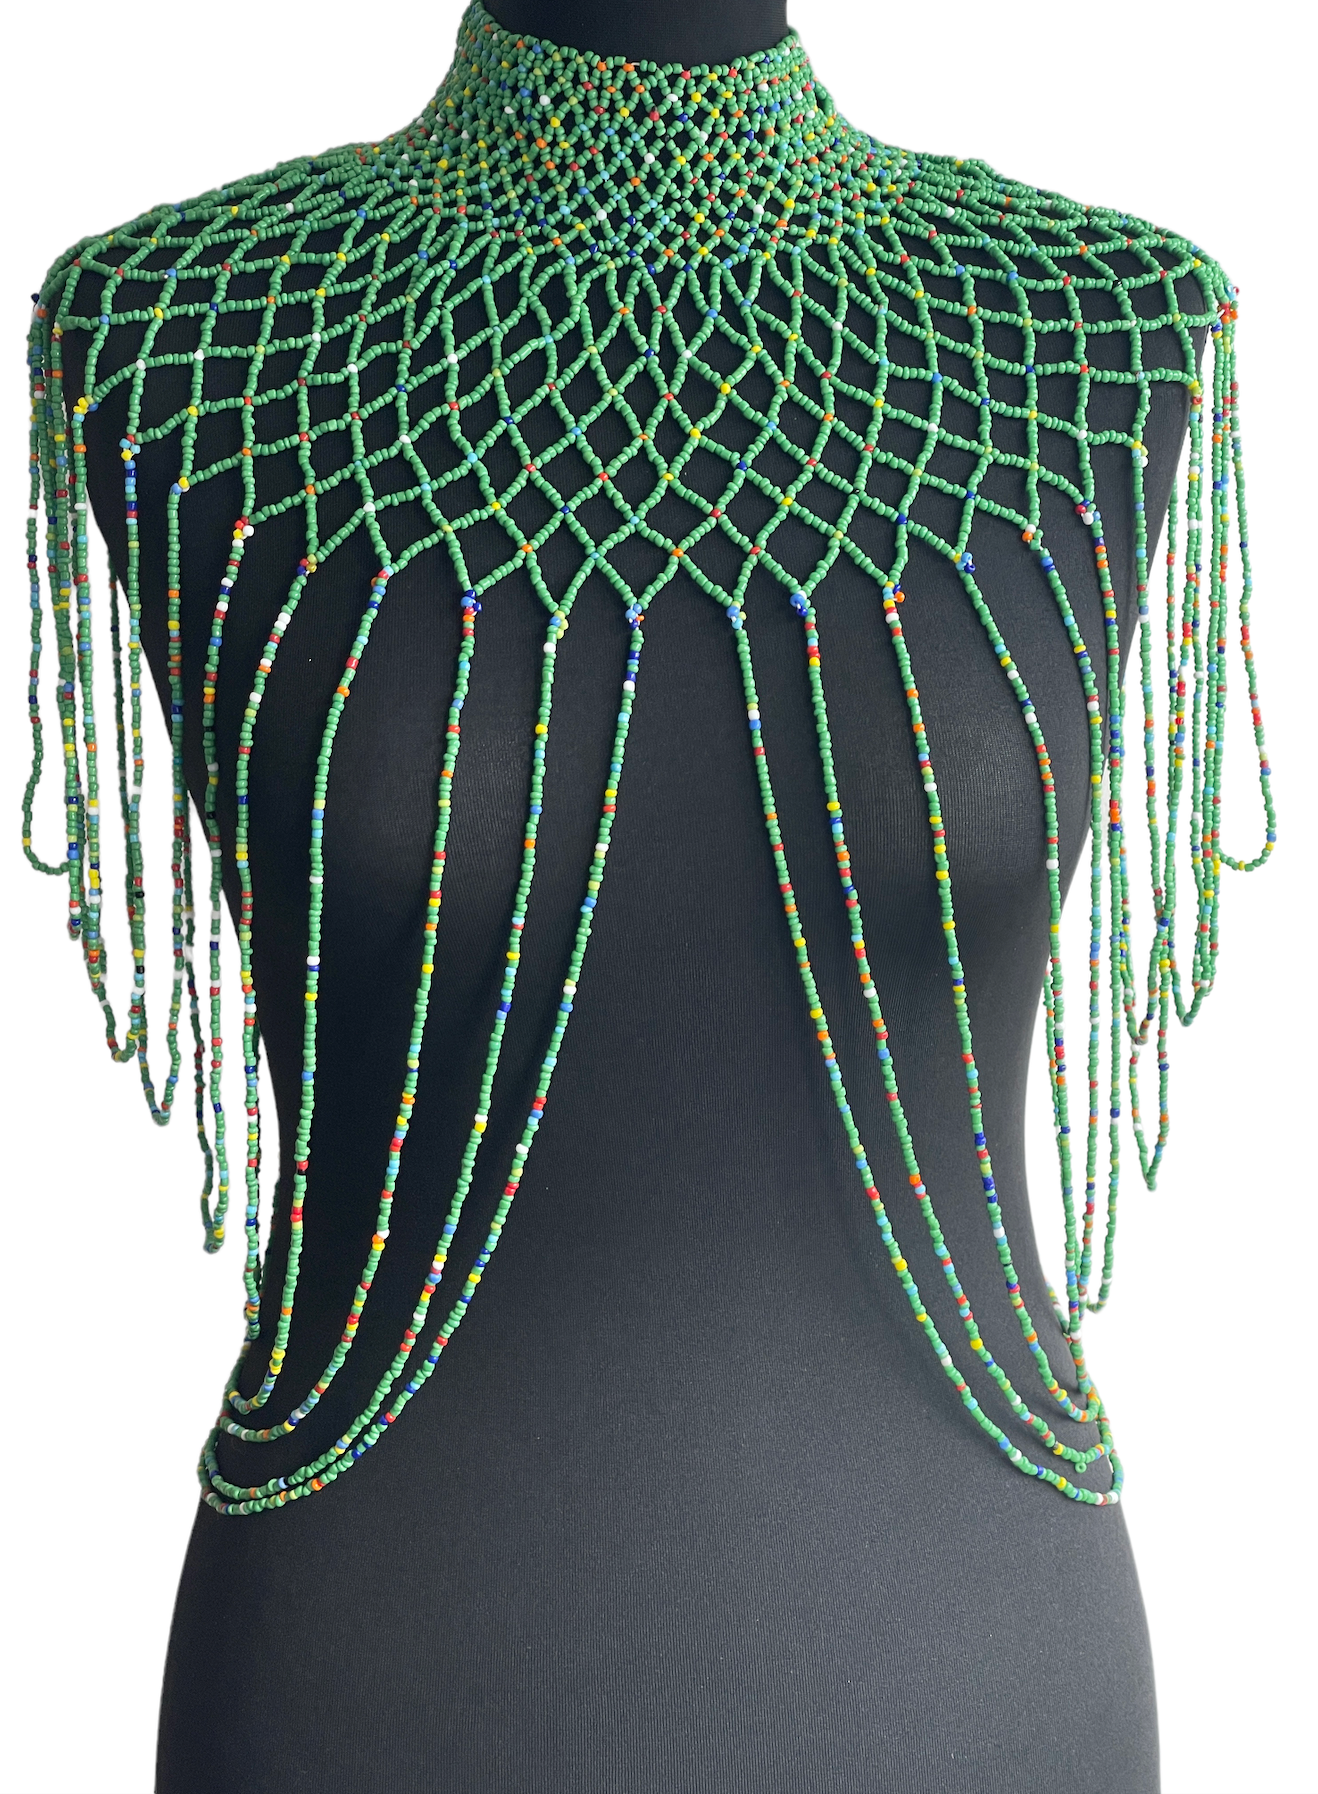 Green Authentic Maasai Zulu Ethnic Beaded Collar Shoulder Body Jewelle